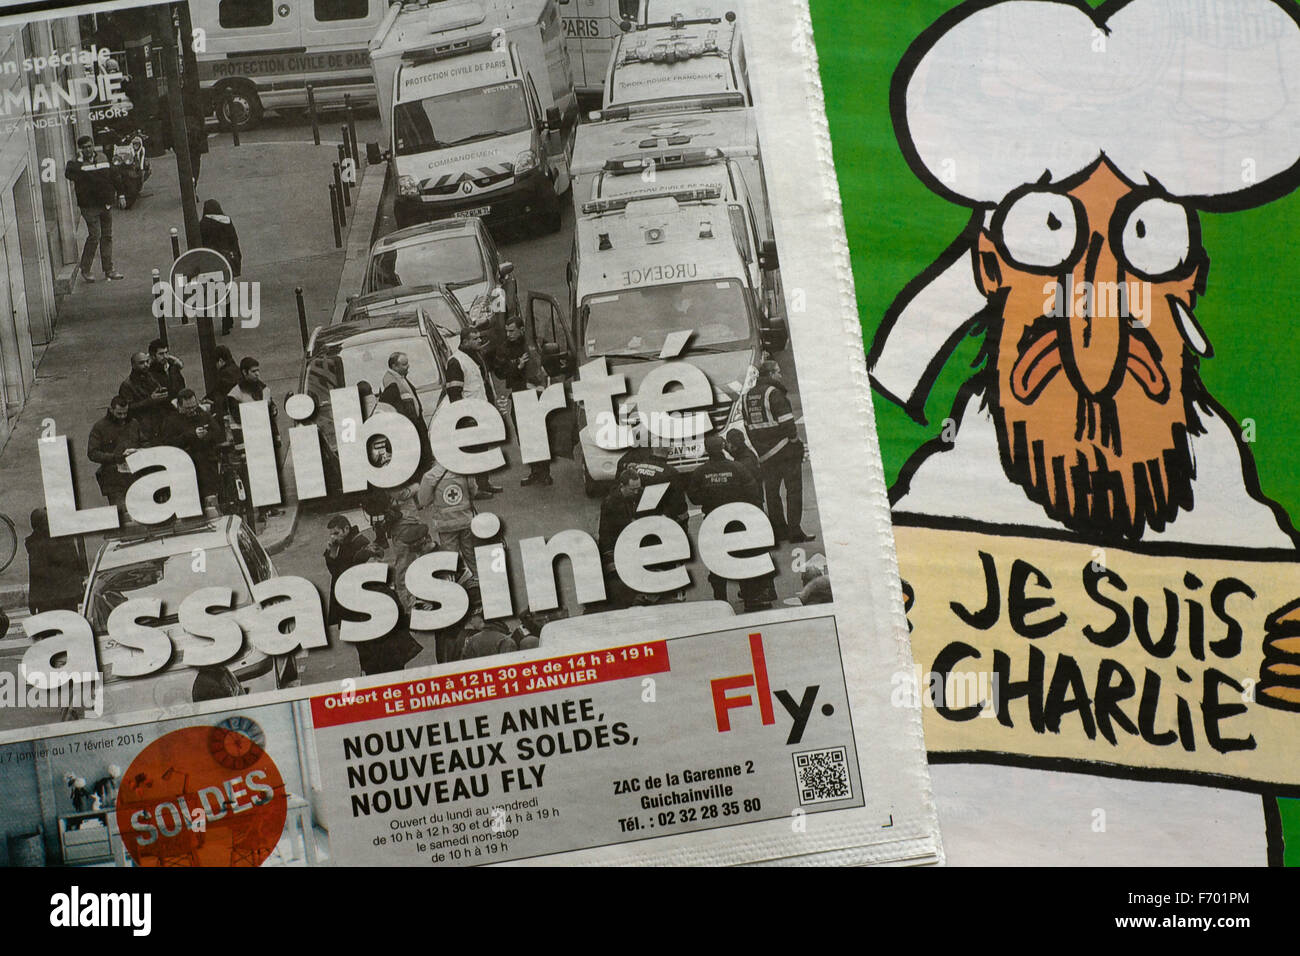 Paris-Normandie cover after Charlie Hebdo attack alongside copy of Charlie Hebdo with Prophet Muhammad cartoon Stock Photo